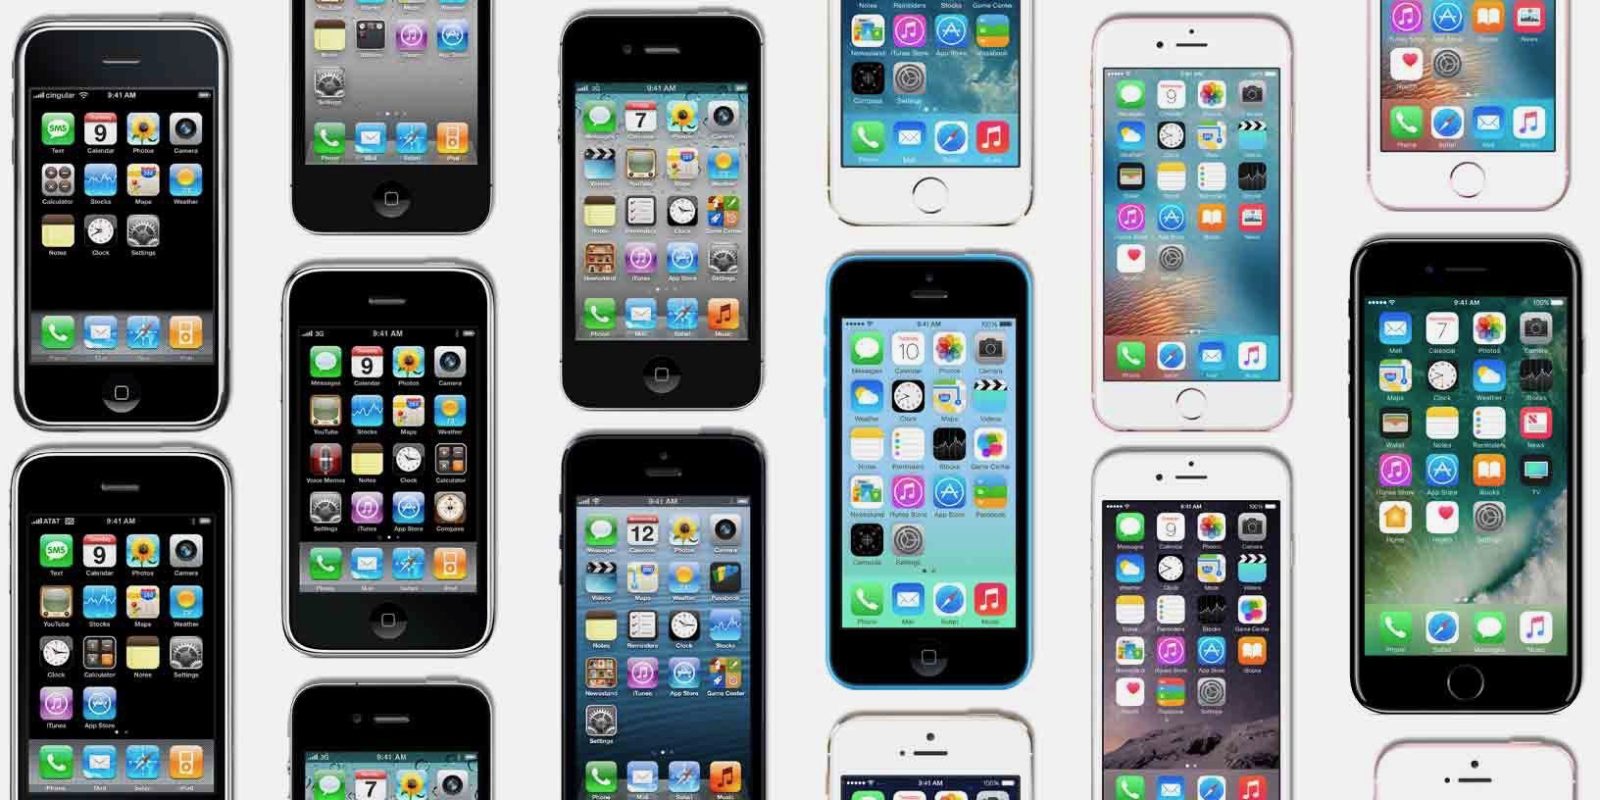 Apple Announces it Has Now Sold Over 1.2 Billion iPhones